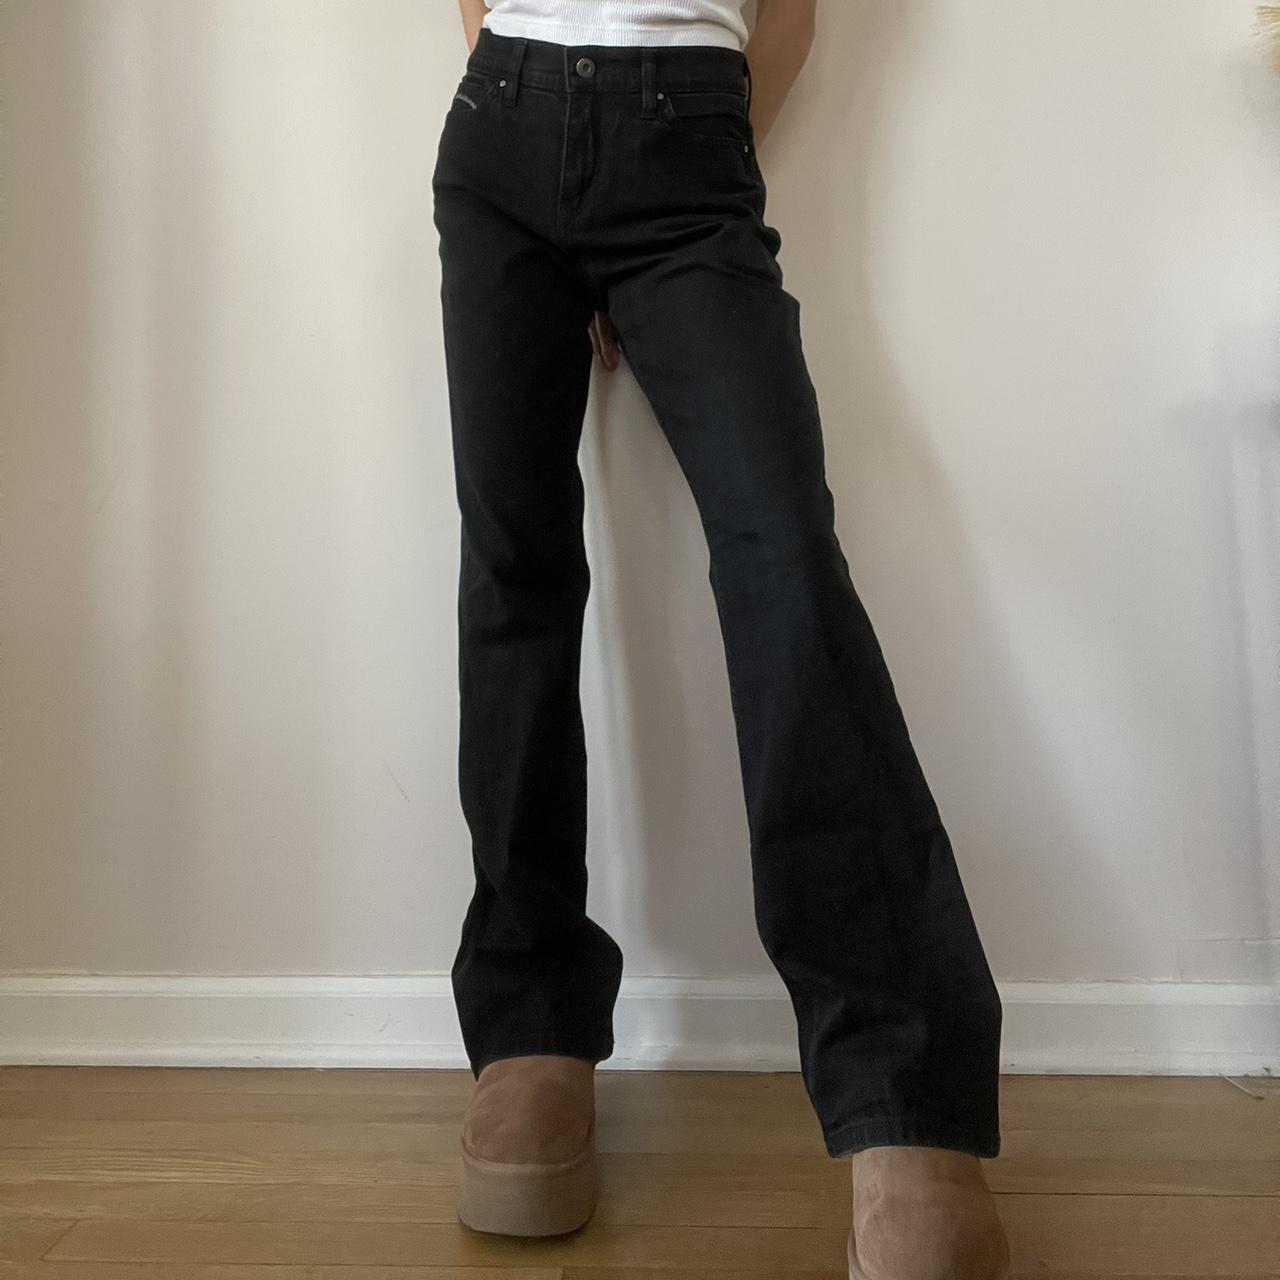 Vintage Black Levi’s Jeans Classic bootcut fit with... - Depop